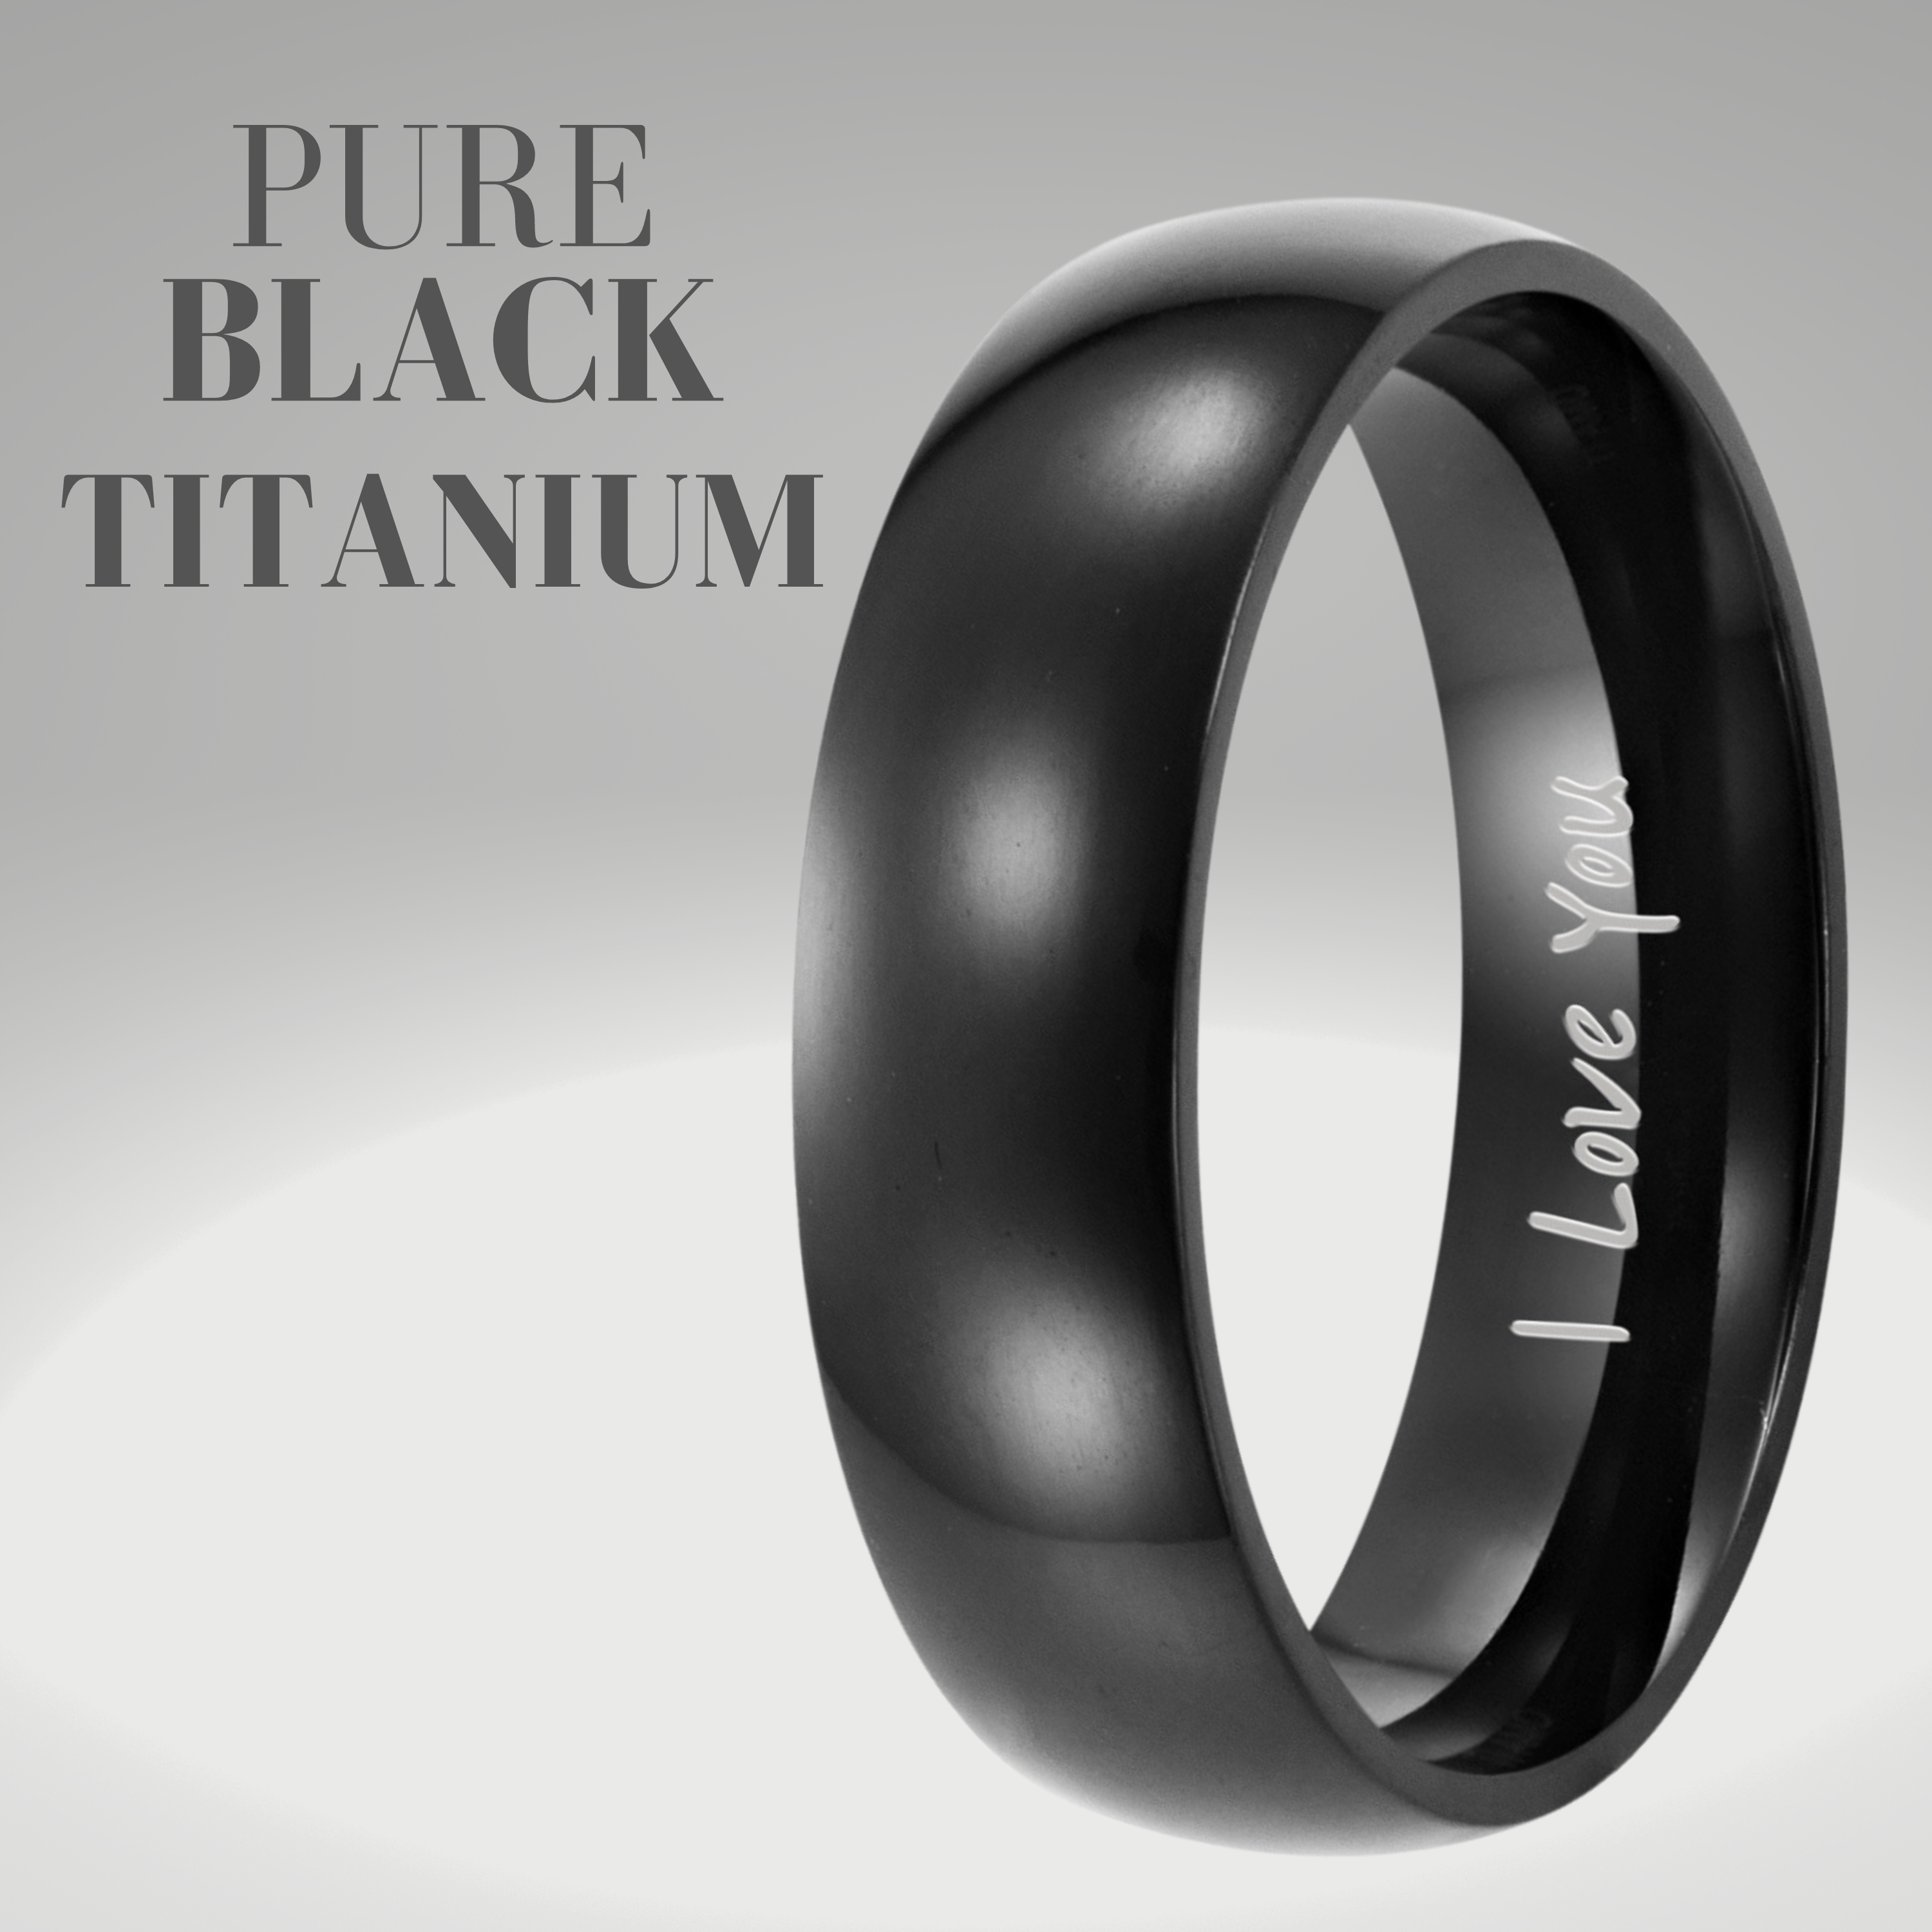 Men’s Ring Etched I Love You Black Titanium 7mm